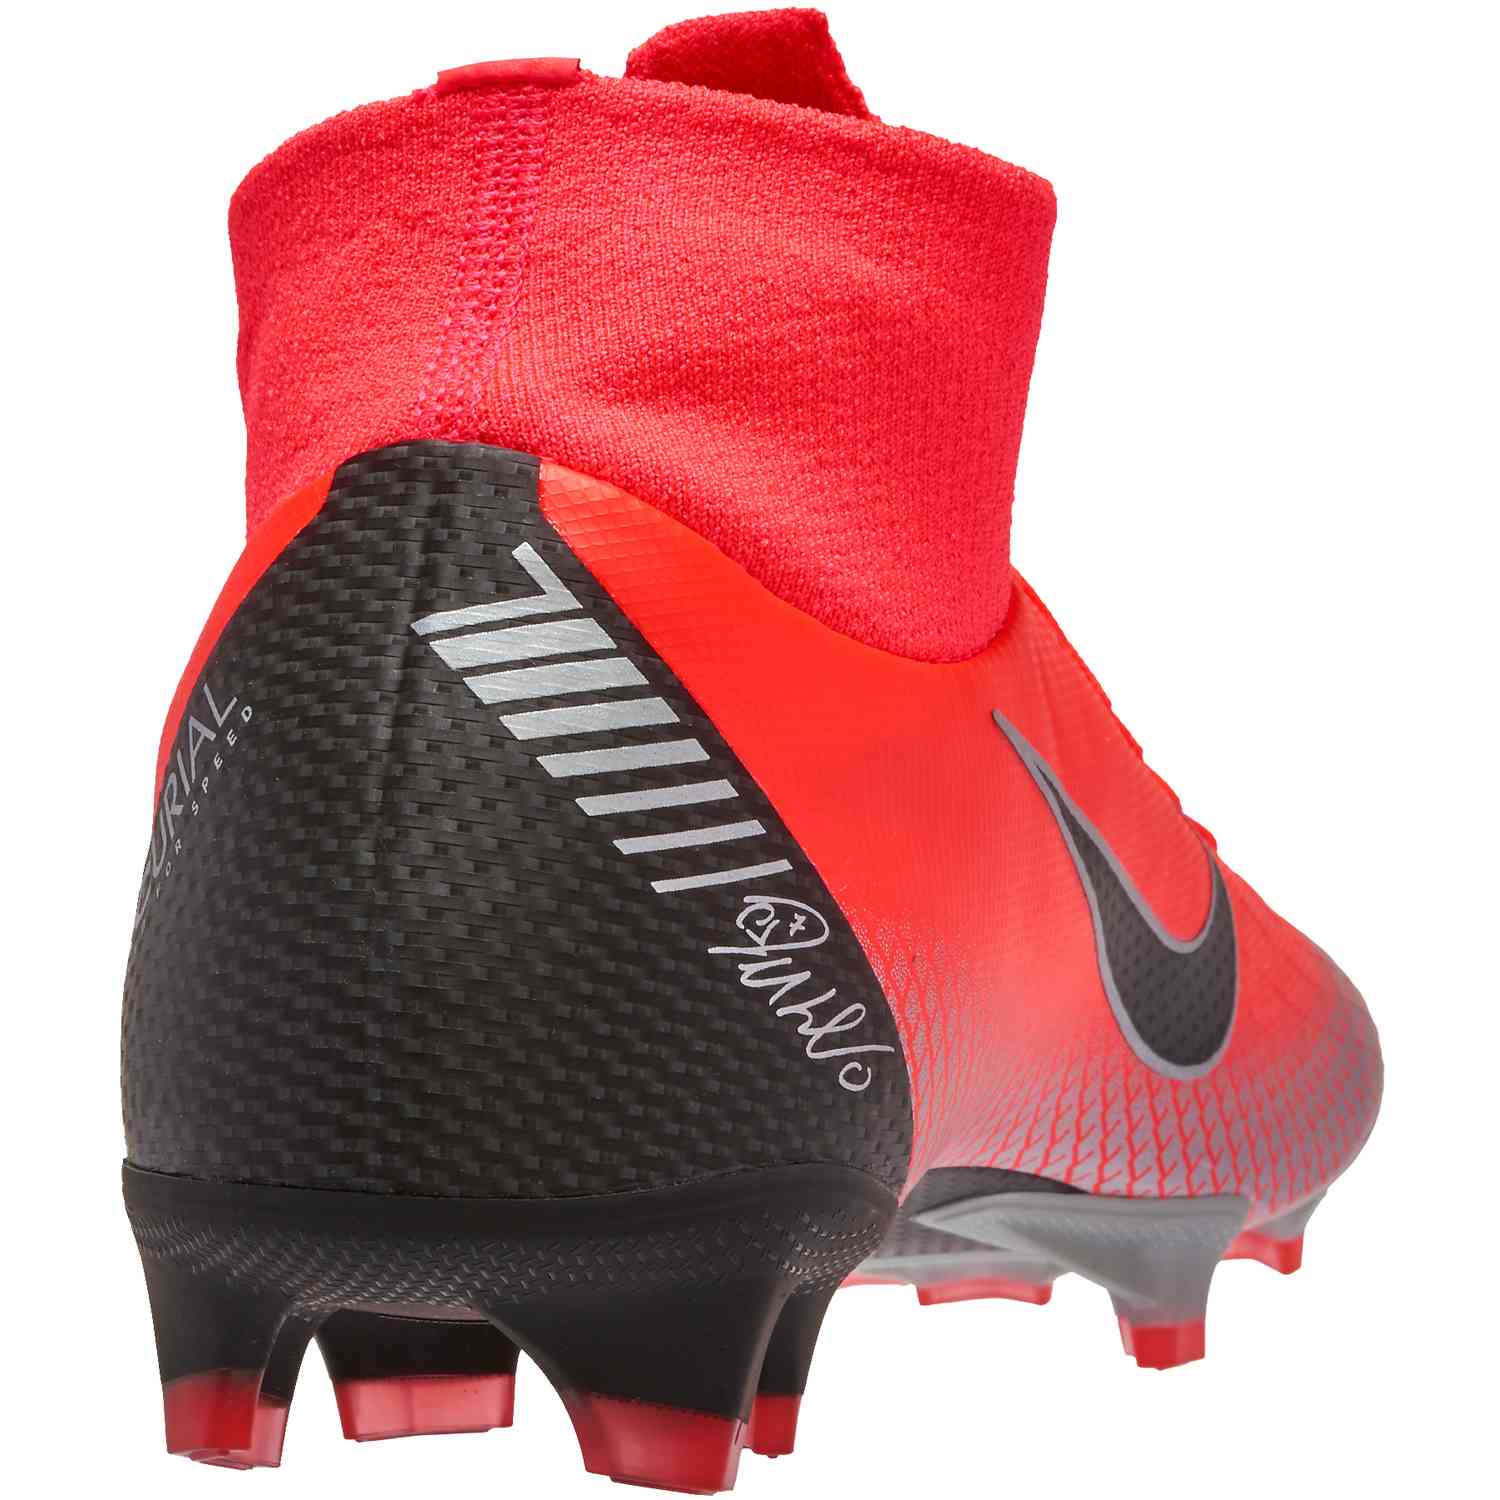 Nike Superfly 6 Pro FG Soccer Cleats Total Orange. eBay